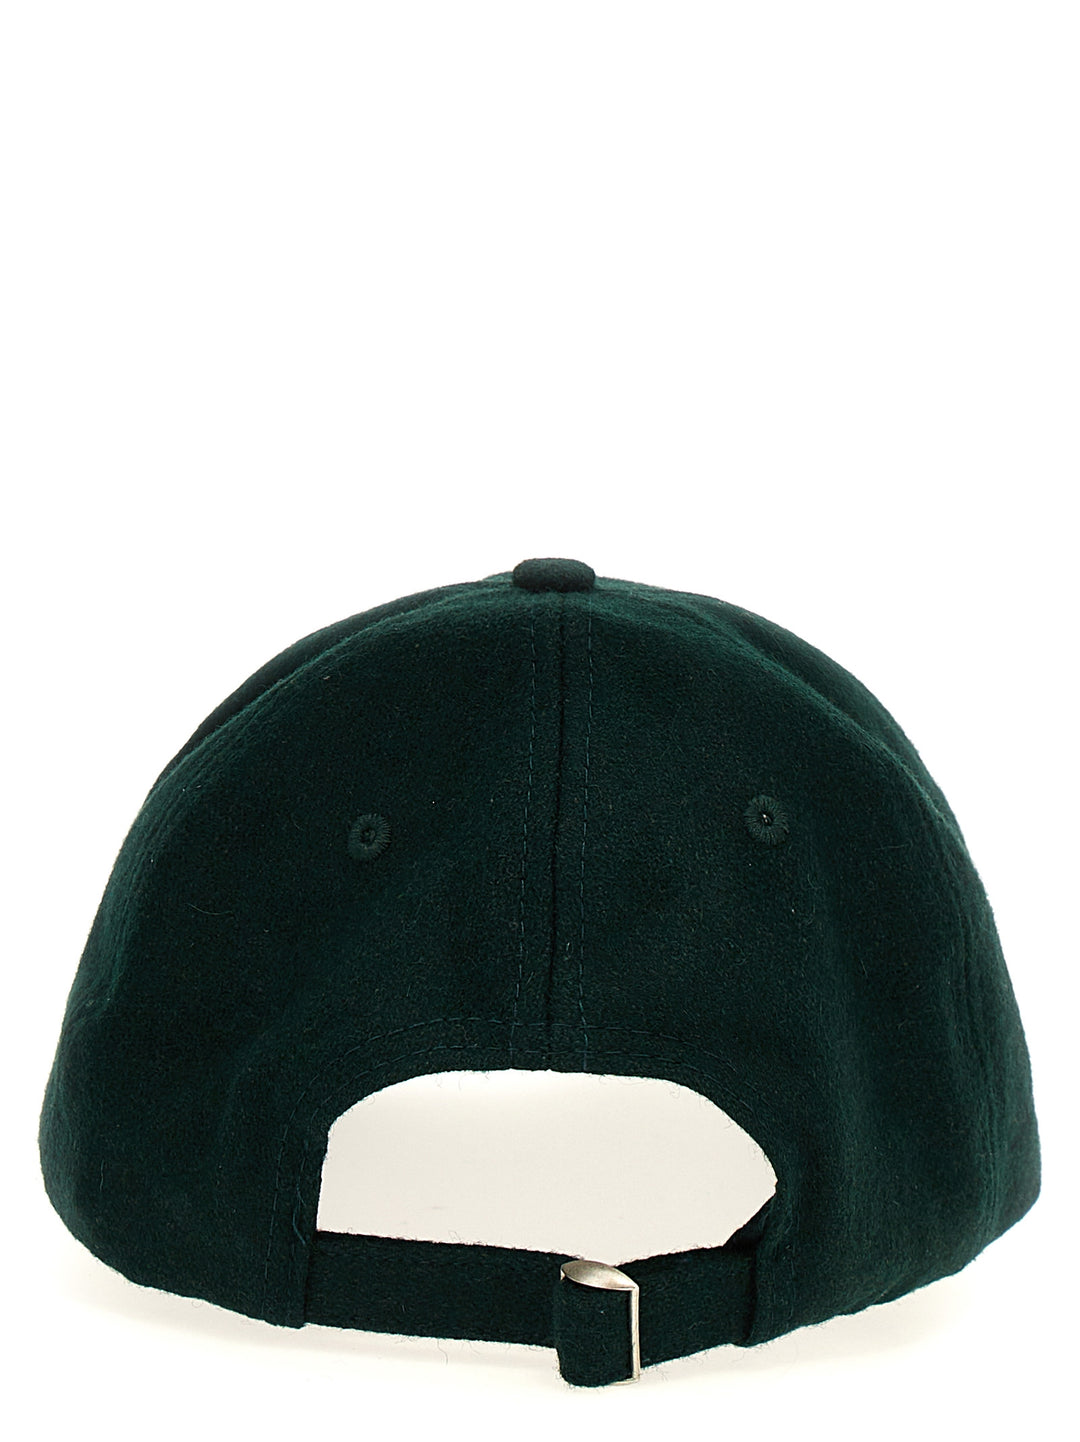 Hashton Cappelli Verde